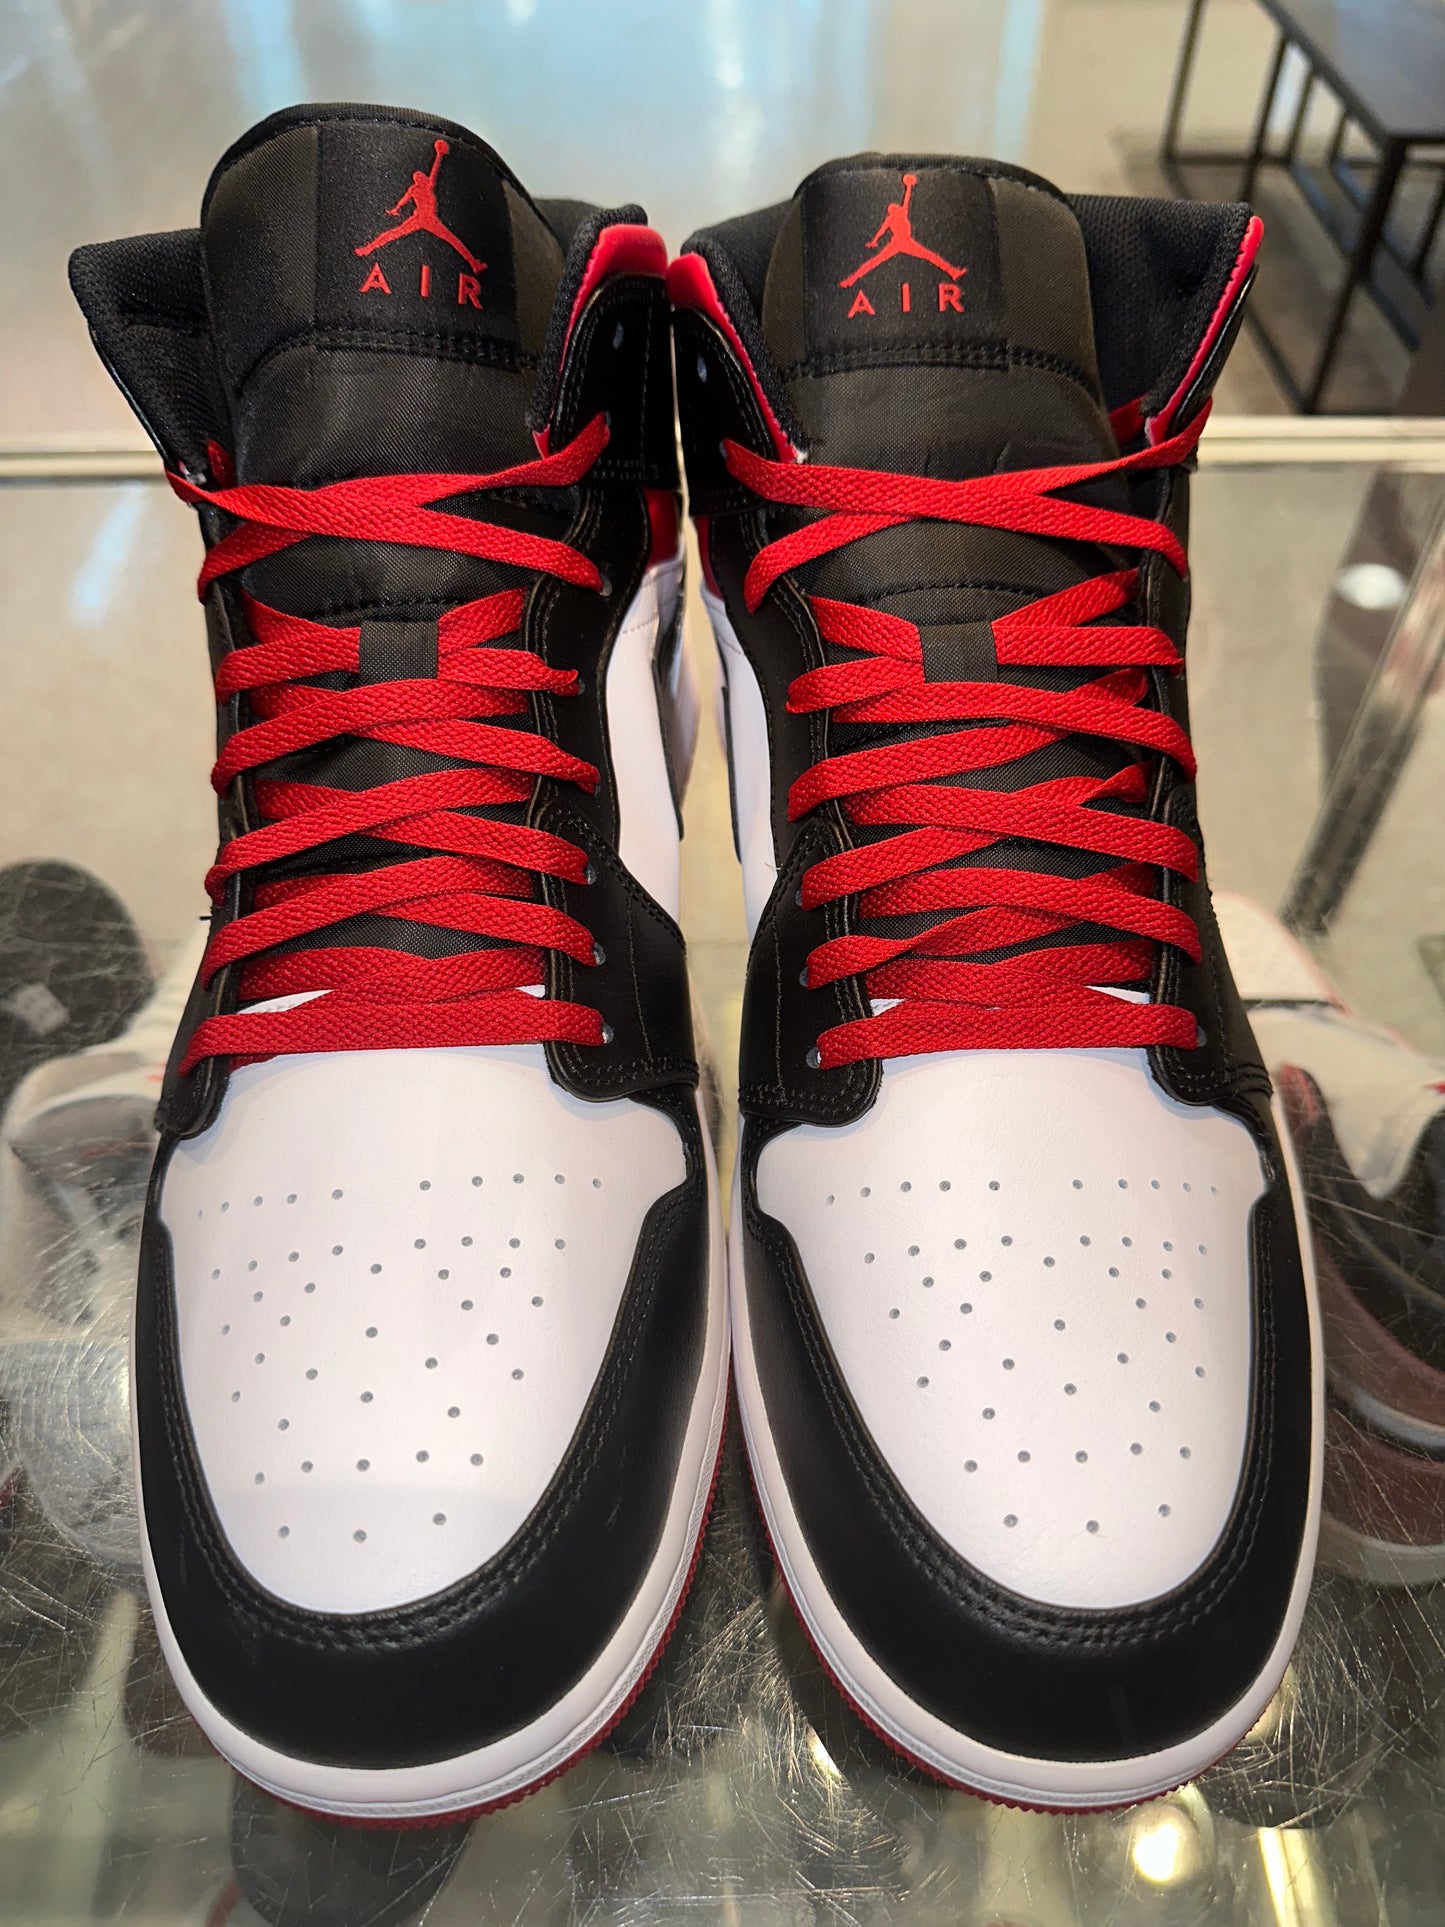 Size 15 Air Jordan 1 Mid “Gym Red Black Toe ” Brand New (Mall)